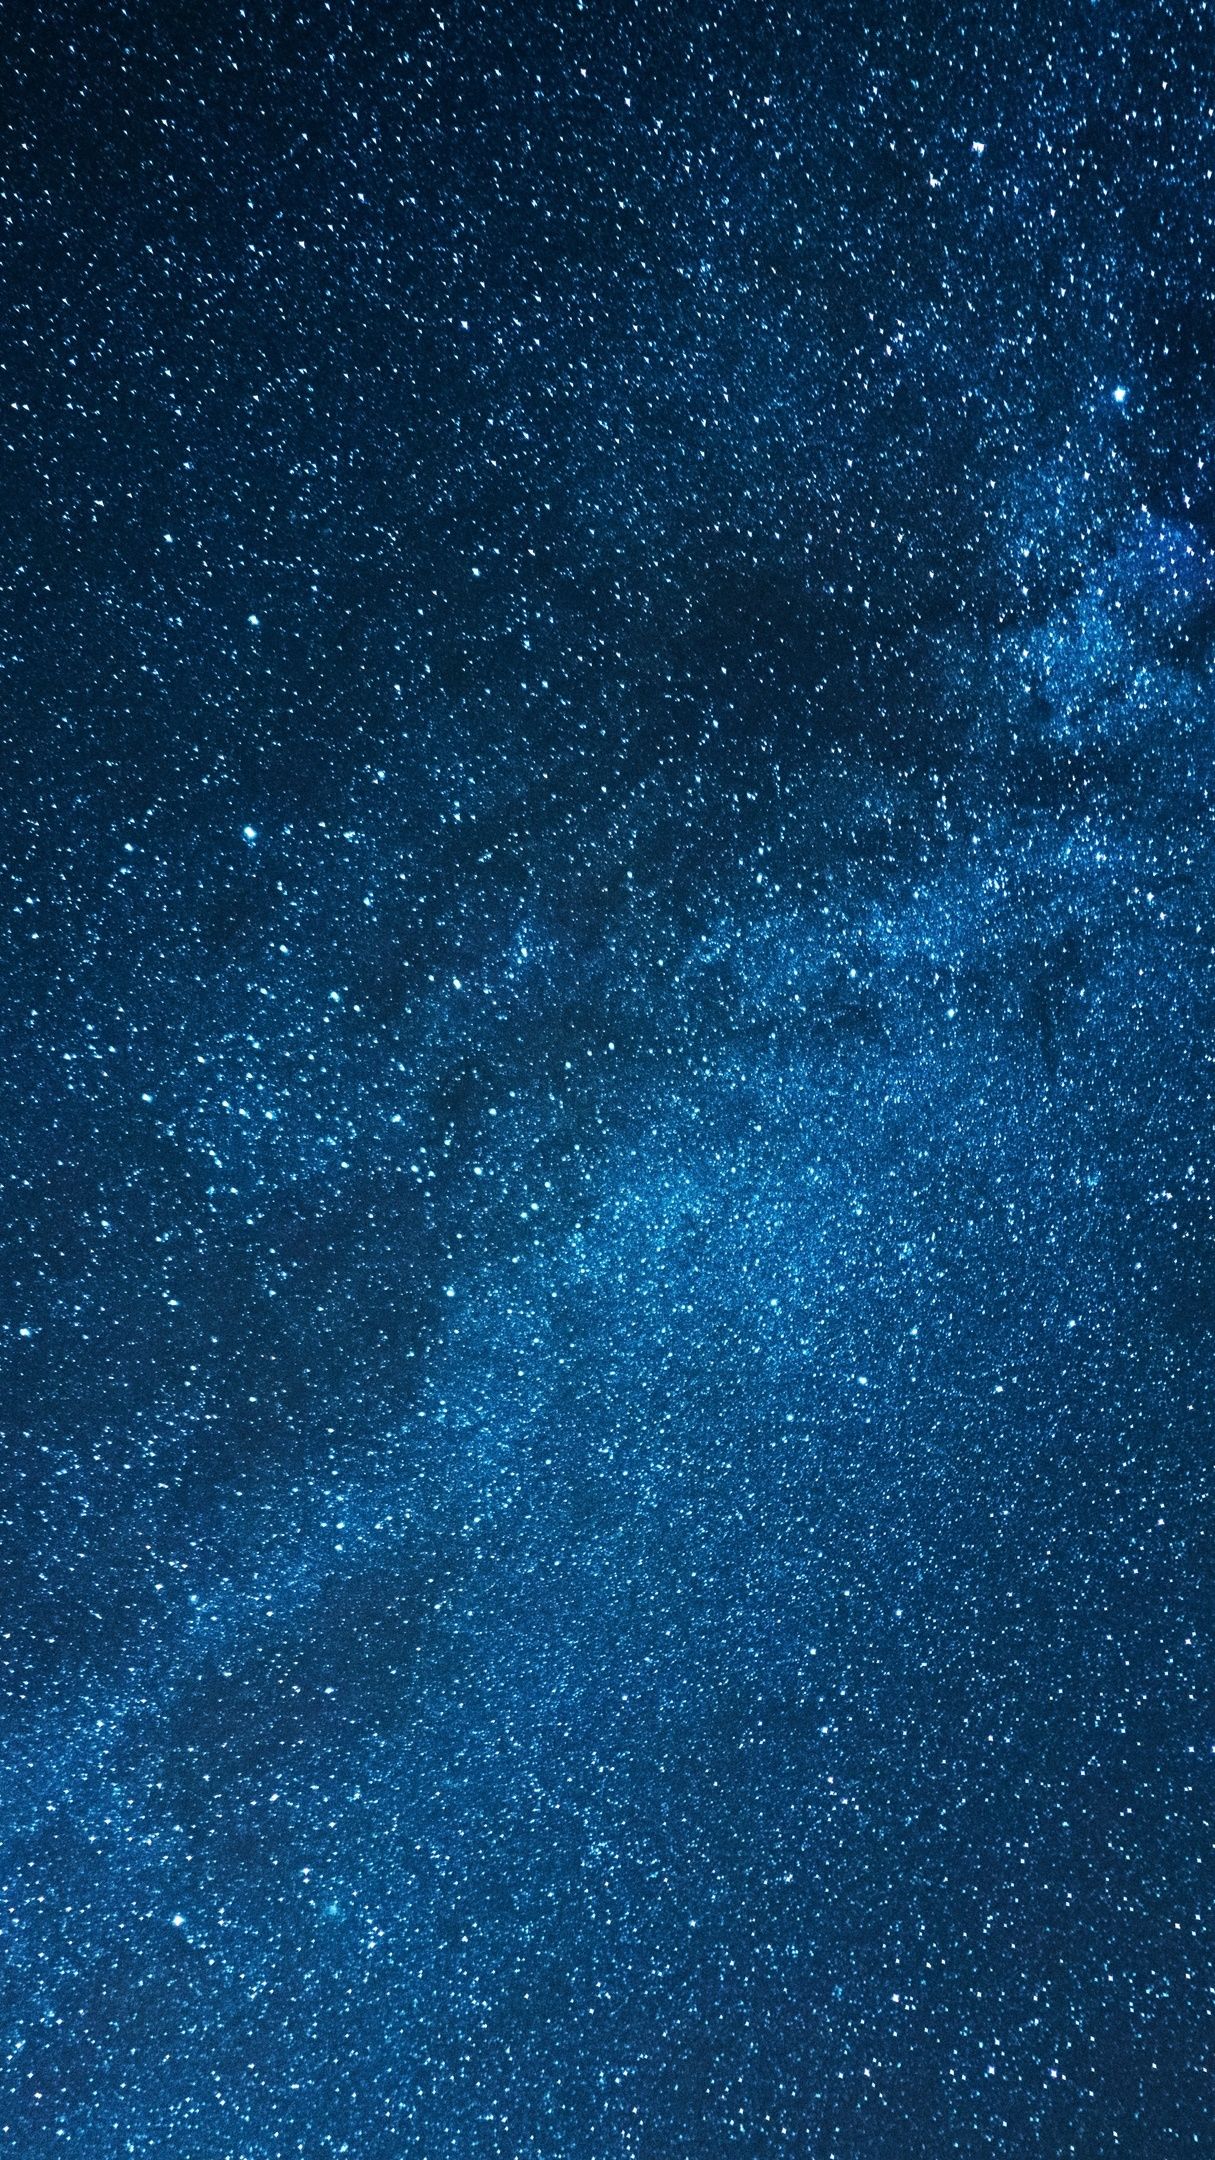 Milky way on the starry night sky - backiee